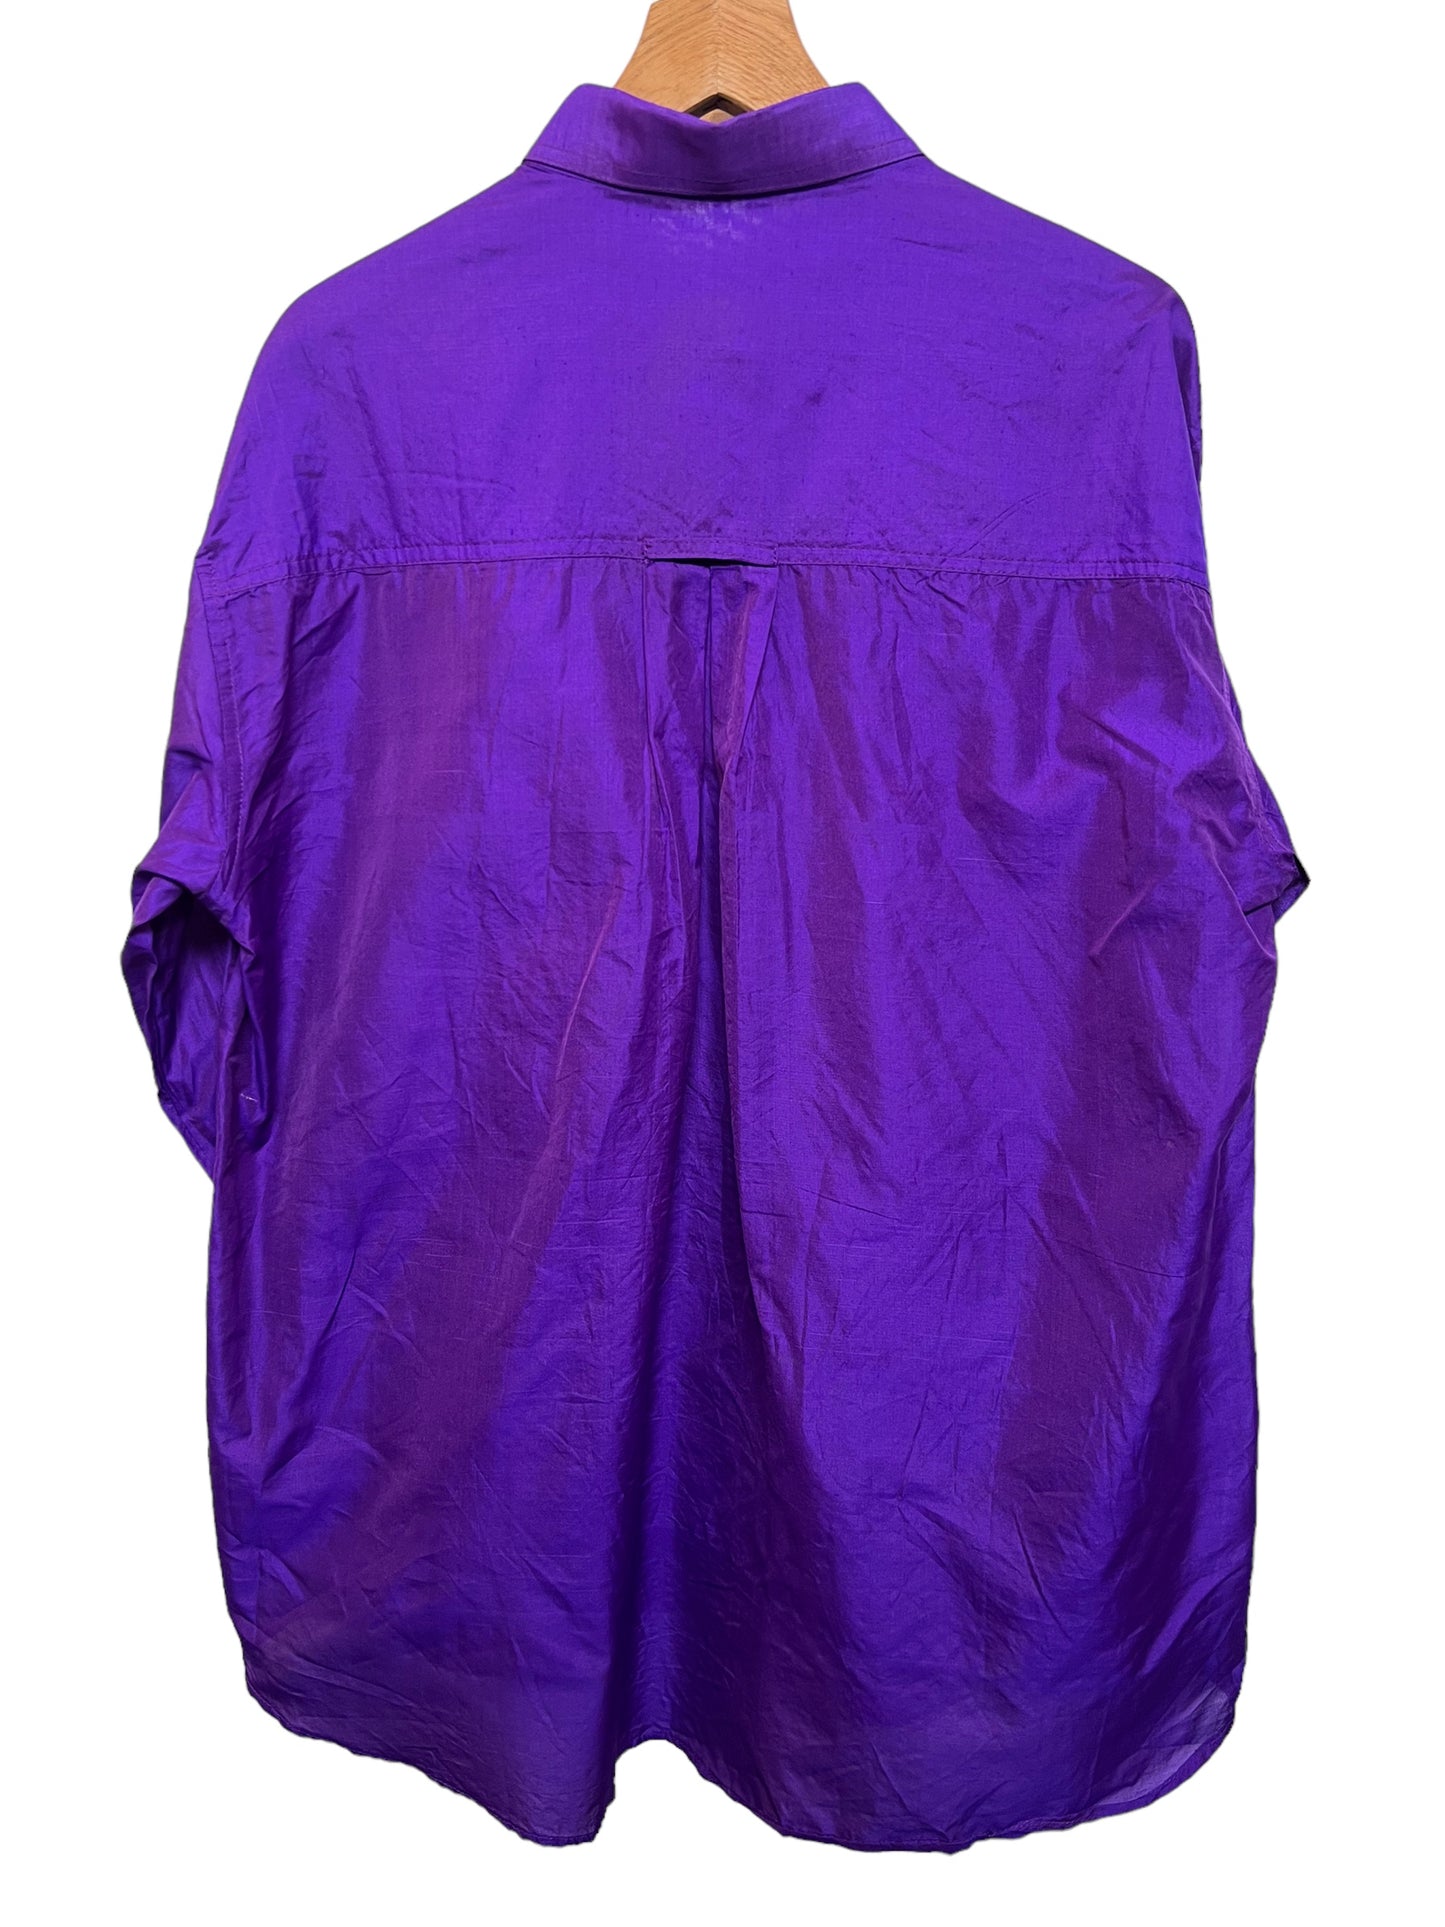 Women’s Purple Long sleeve Shirt (Size XL)